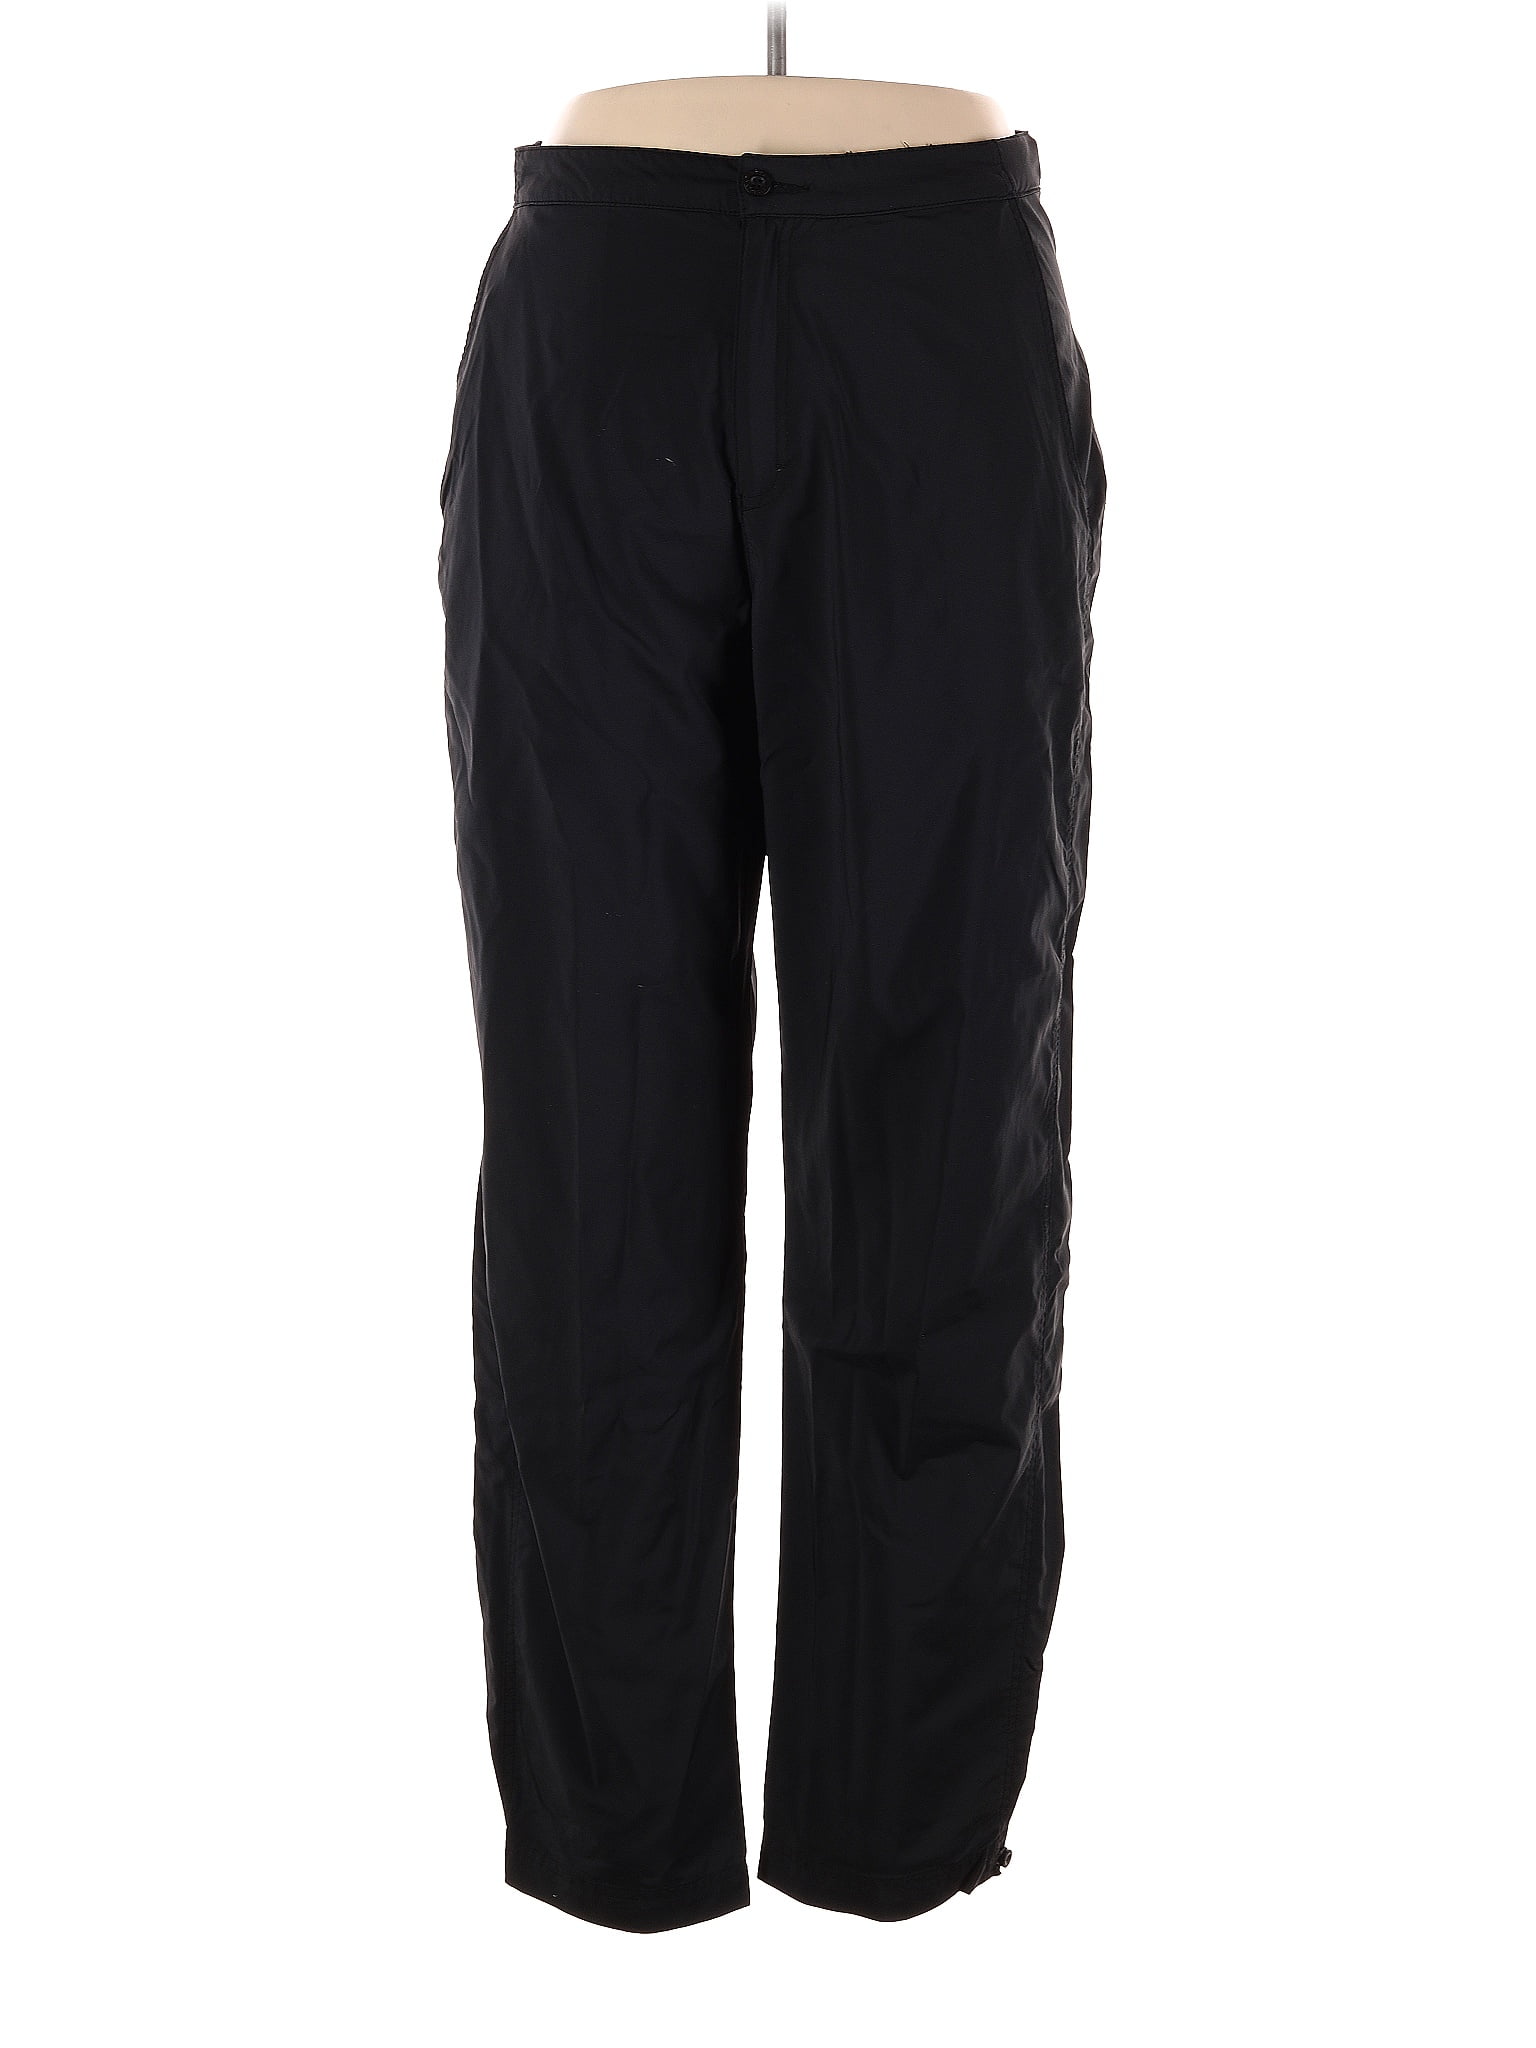 Royal Robbins Solid Black Dress Pants Size 18 (Plus) - 71% off | thredUP